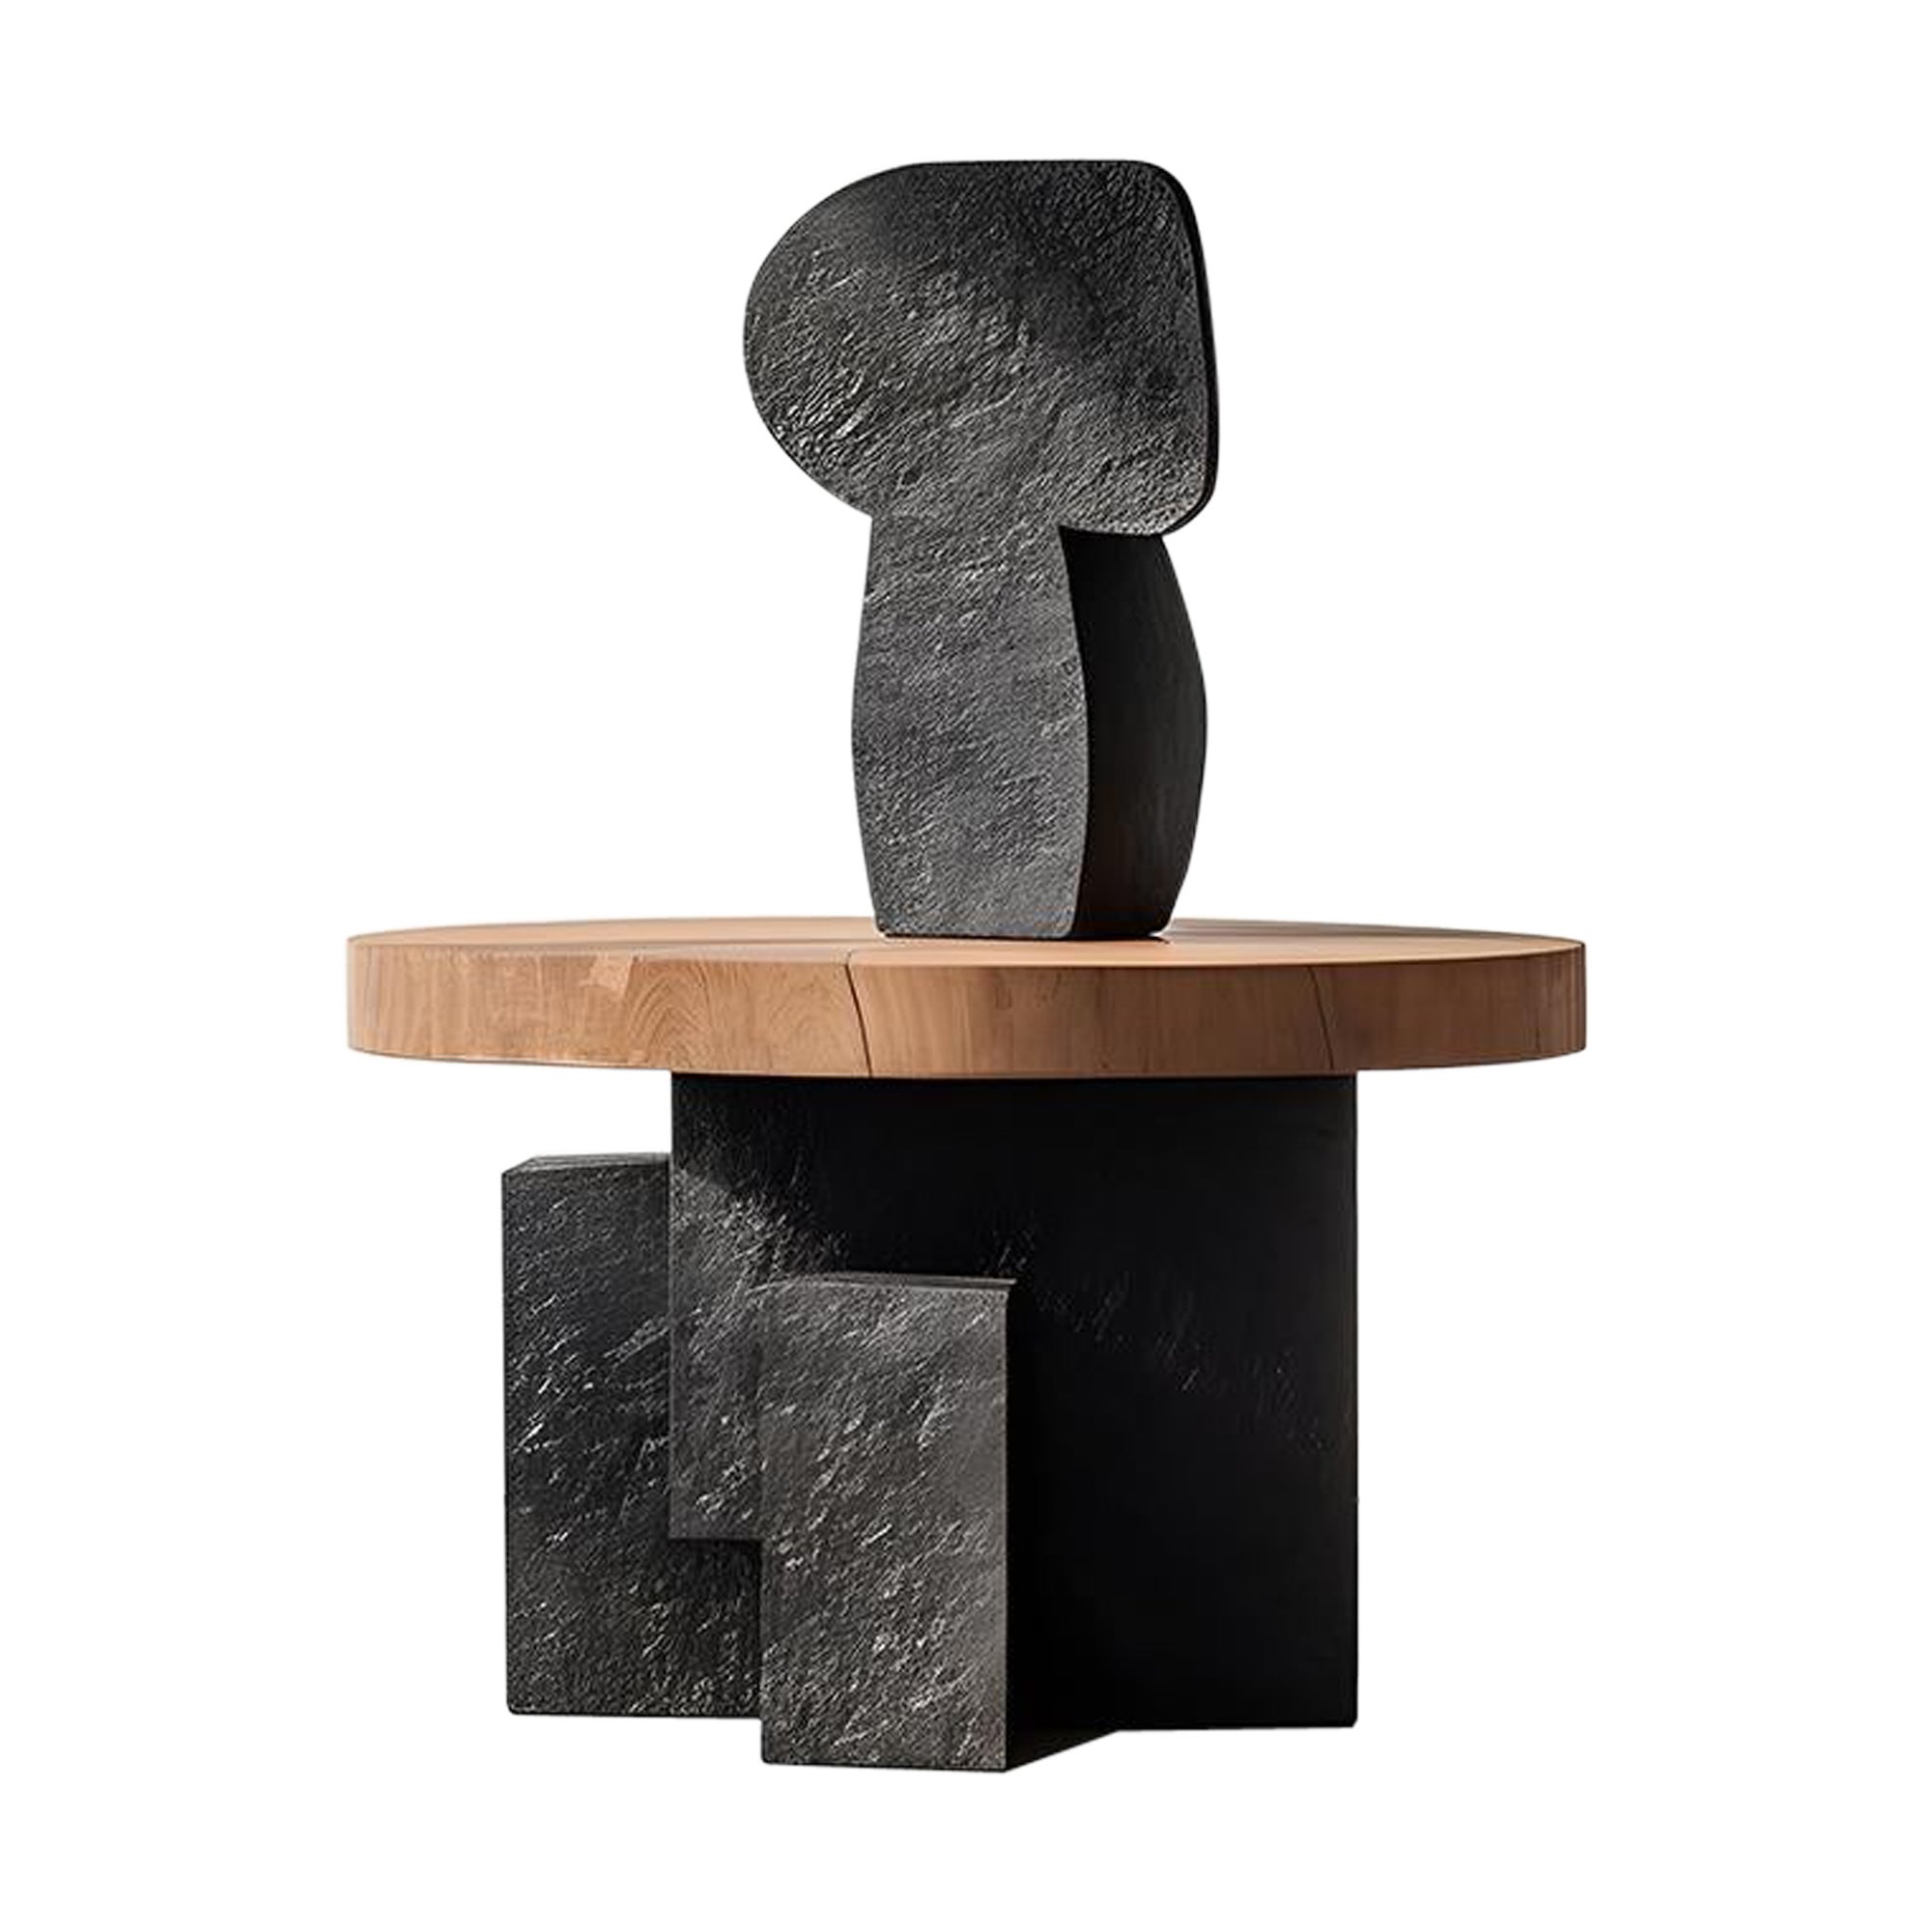 Artful Oak Unseen Force #41: Joel Escalona's Coffee Table, Sculptural Design